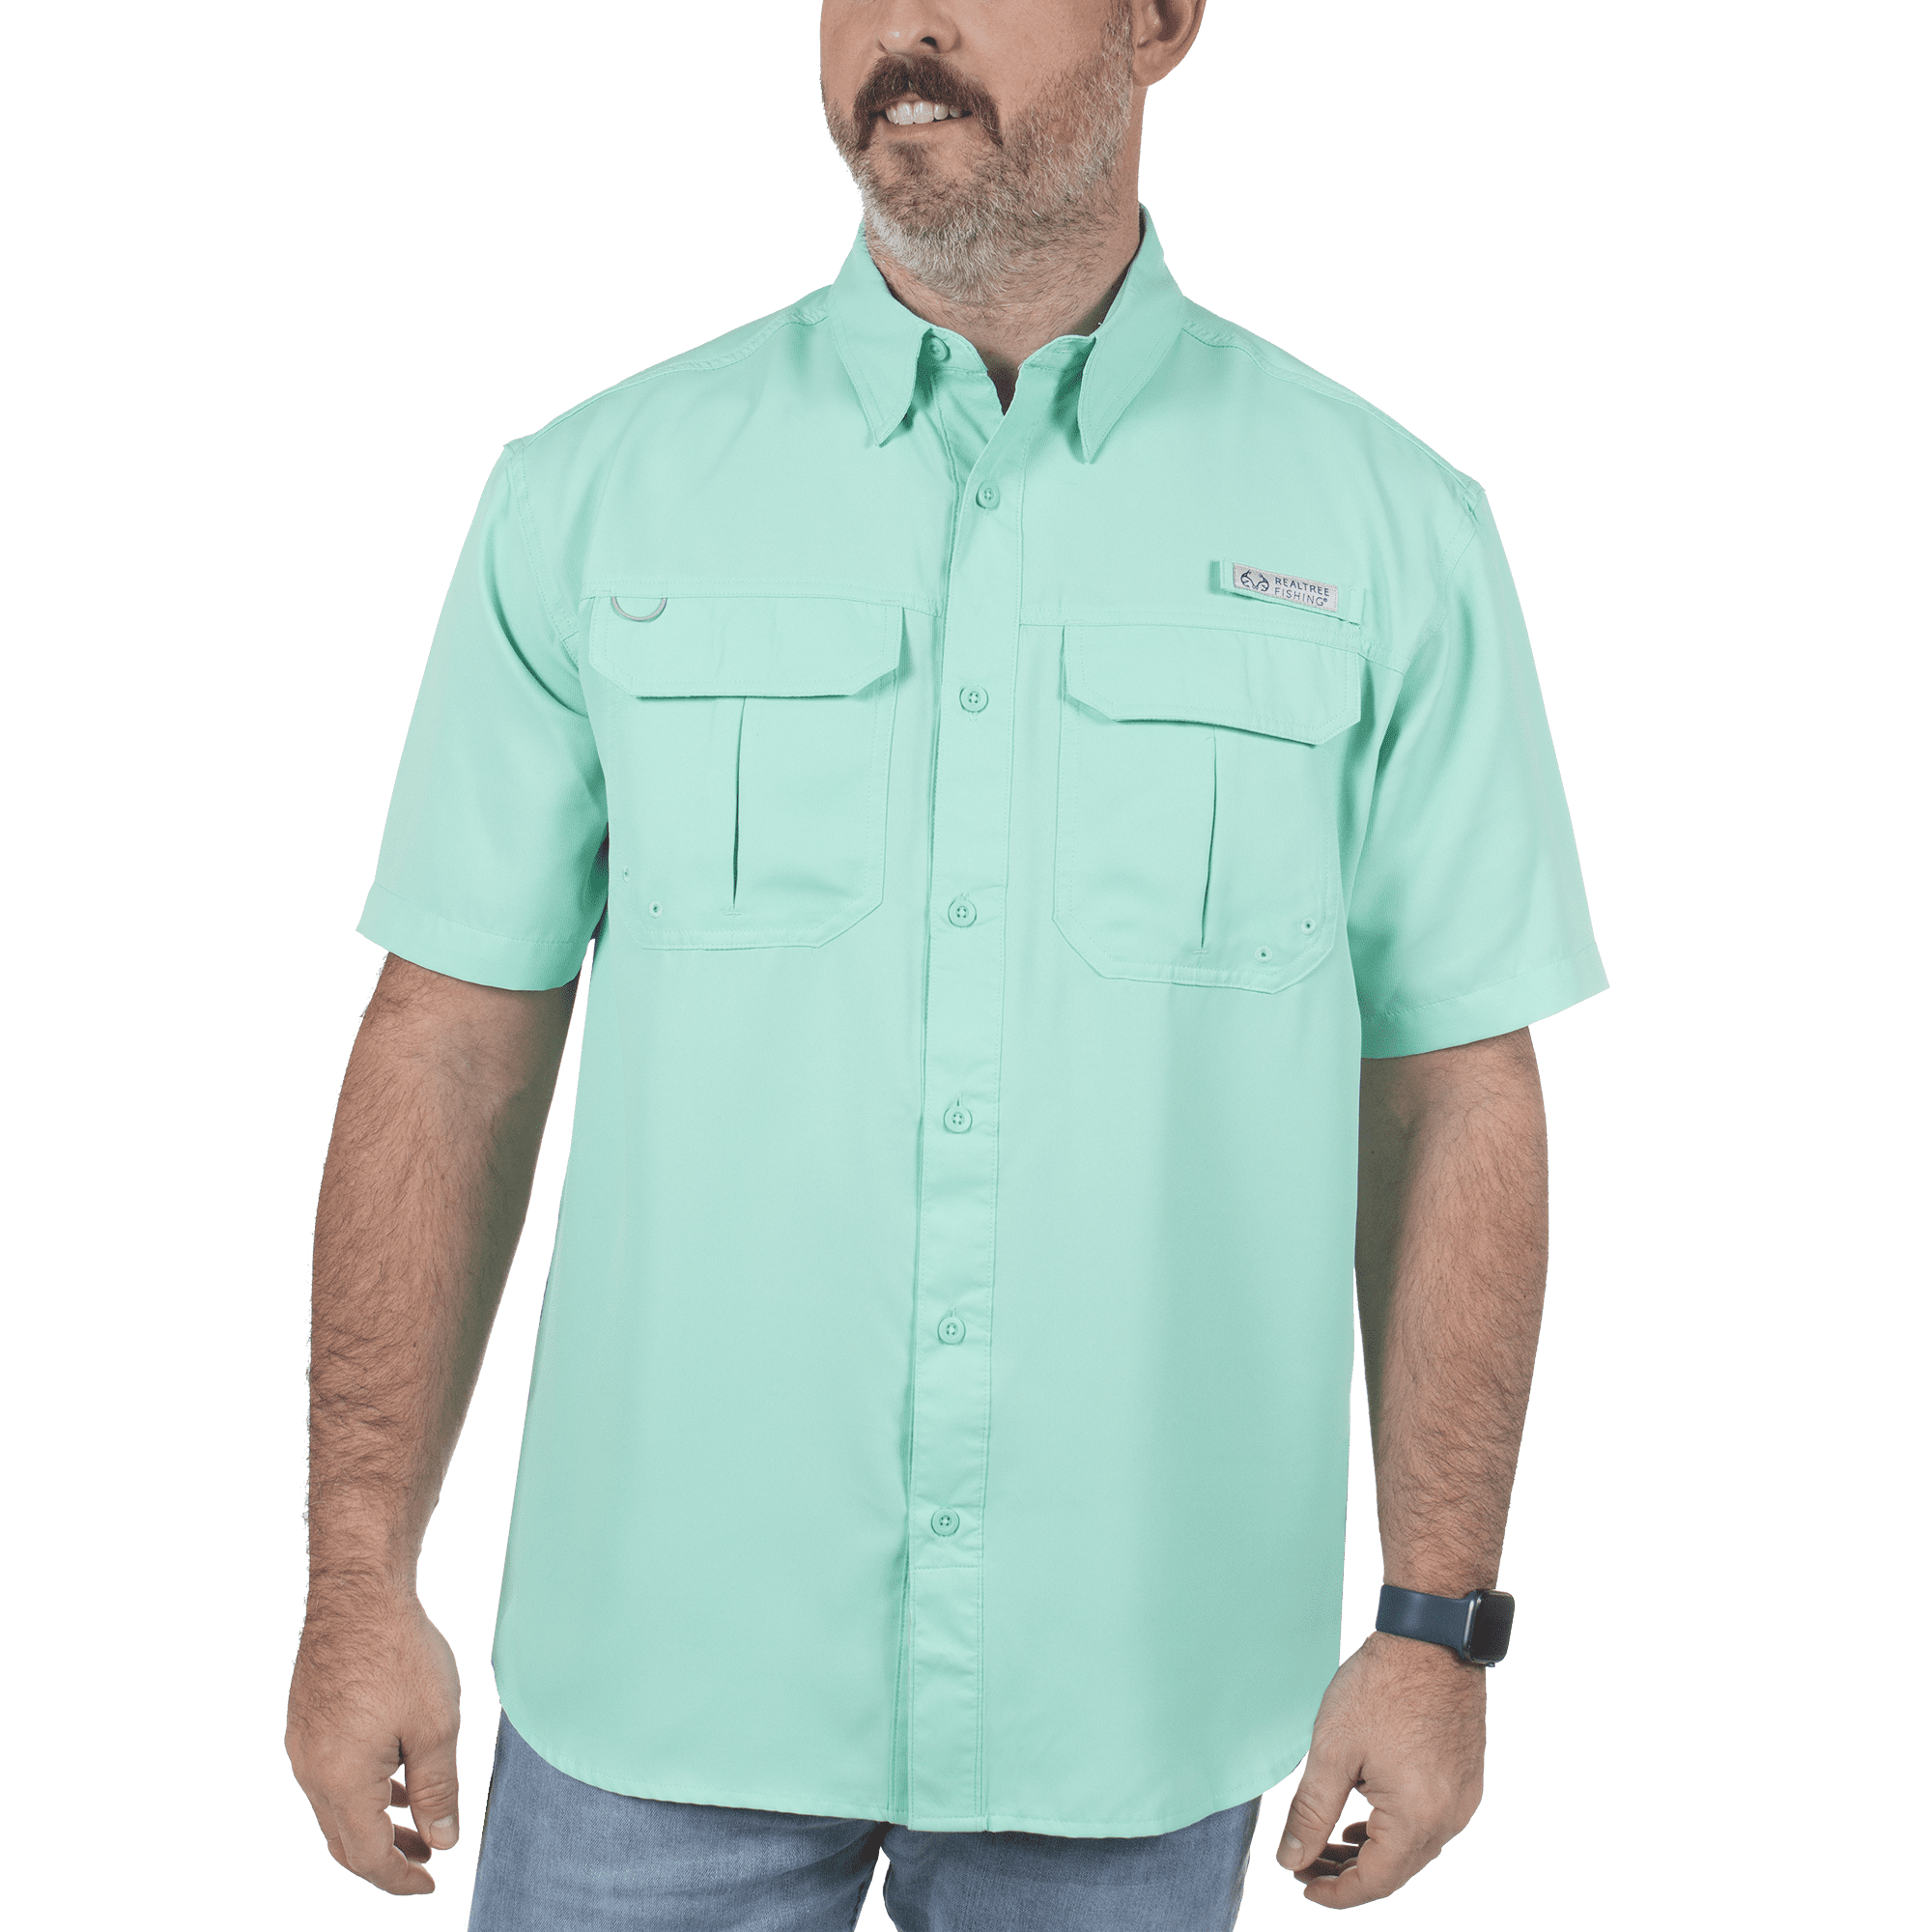 Mens coleman fishing shirt - Gem